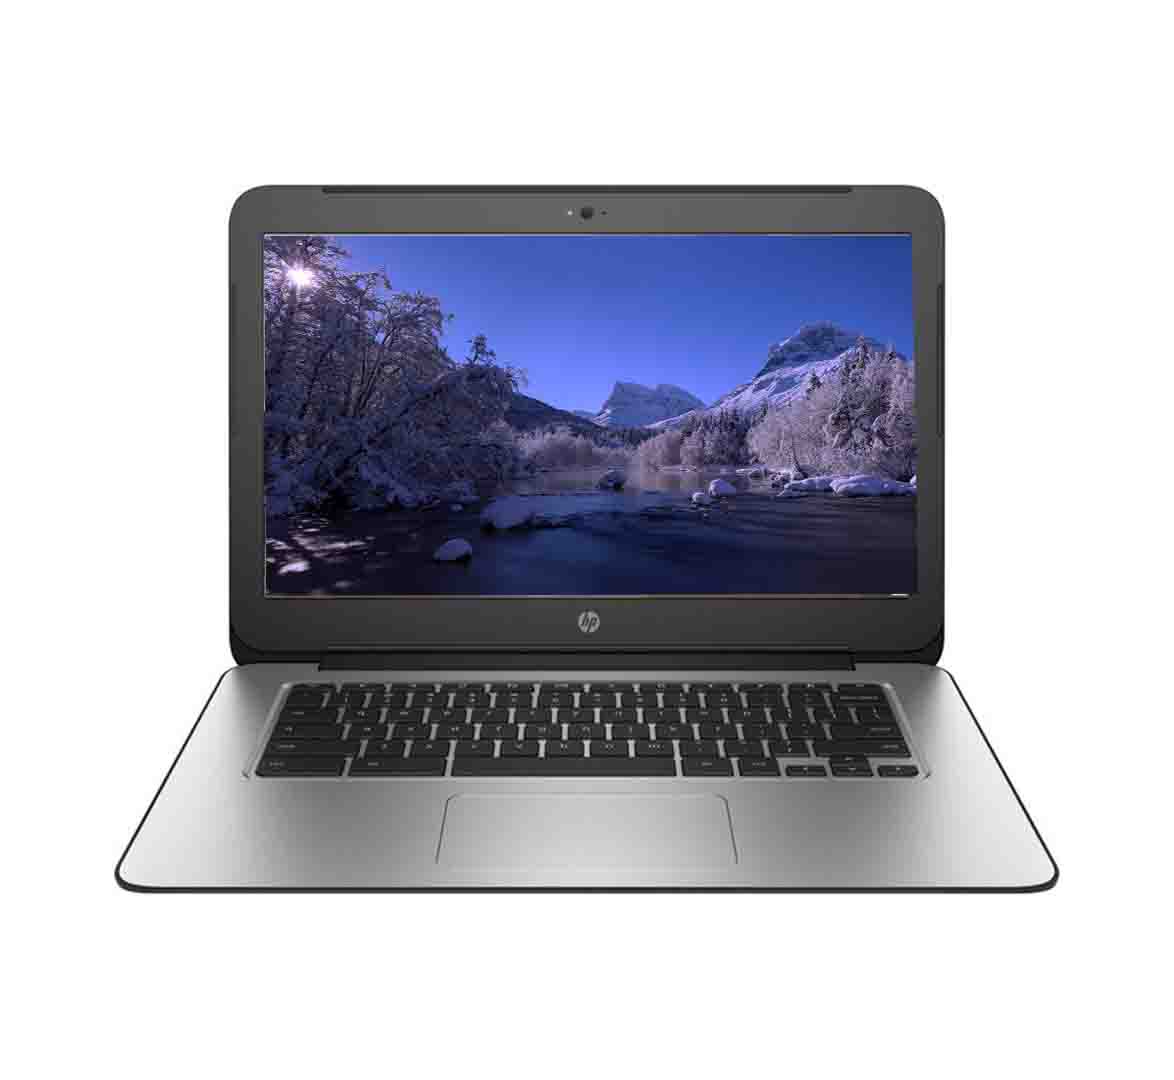 HP Chromebook 14 G3 Business Laptop, Nvidia Tegra Series CPU, 4GB DDR3 RAM, 16GB SSD, 14 inch Display, Chrome OS, Refurbished Laptop